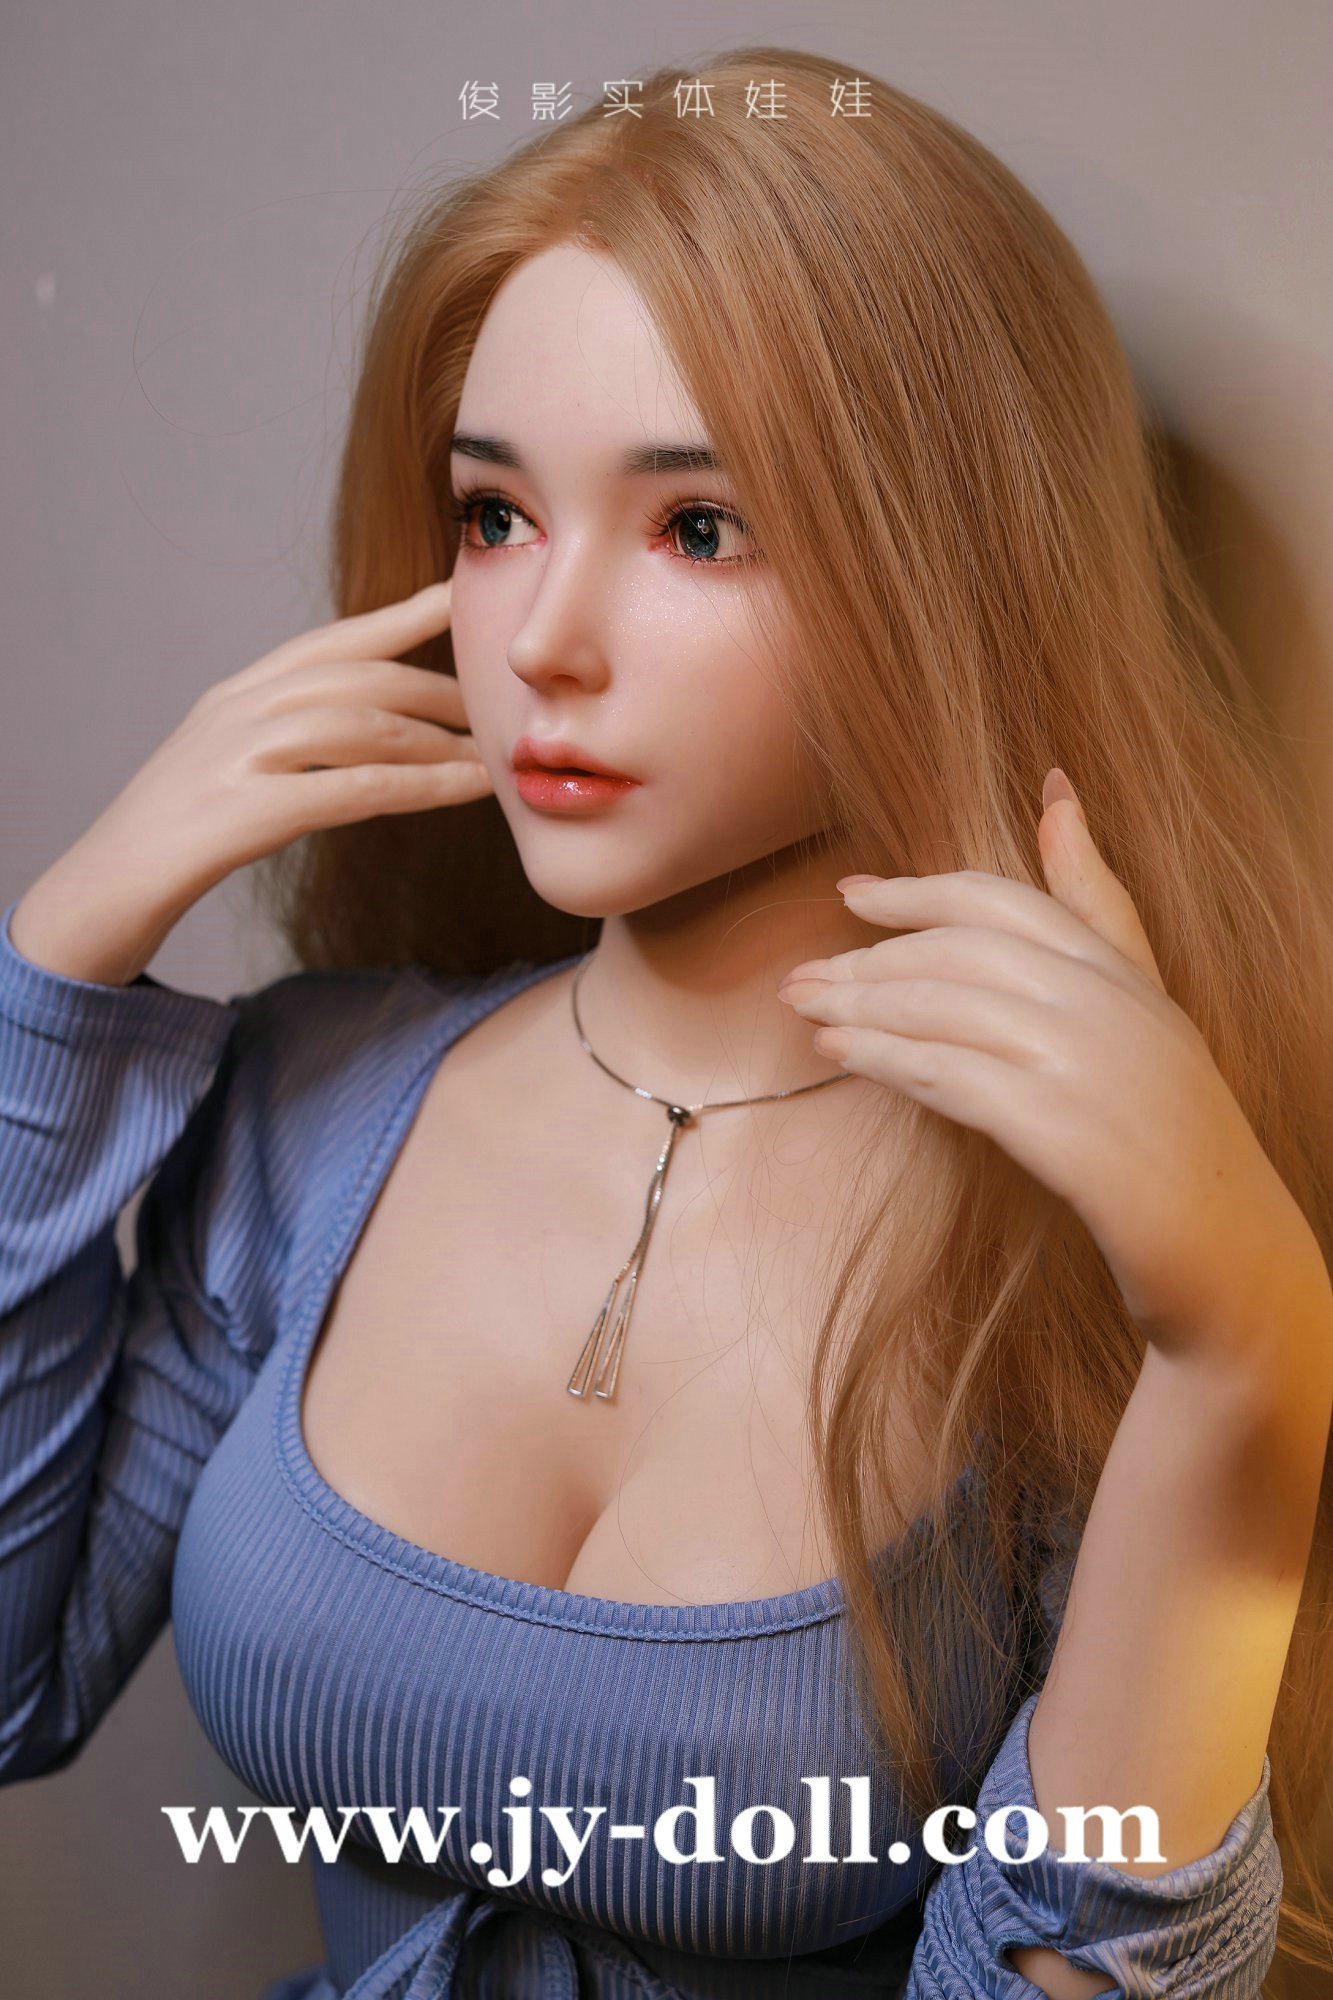 JY Doll 165cm super real vagina full silicone doll Natally